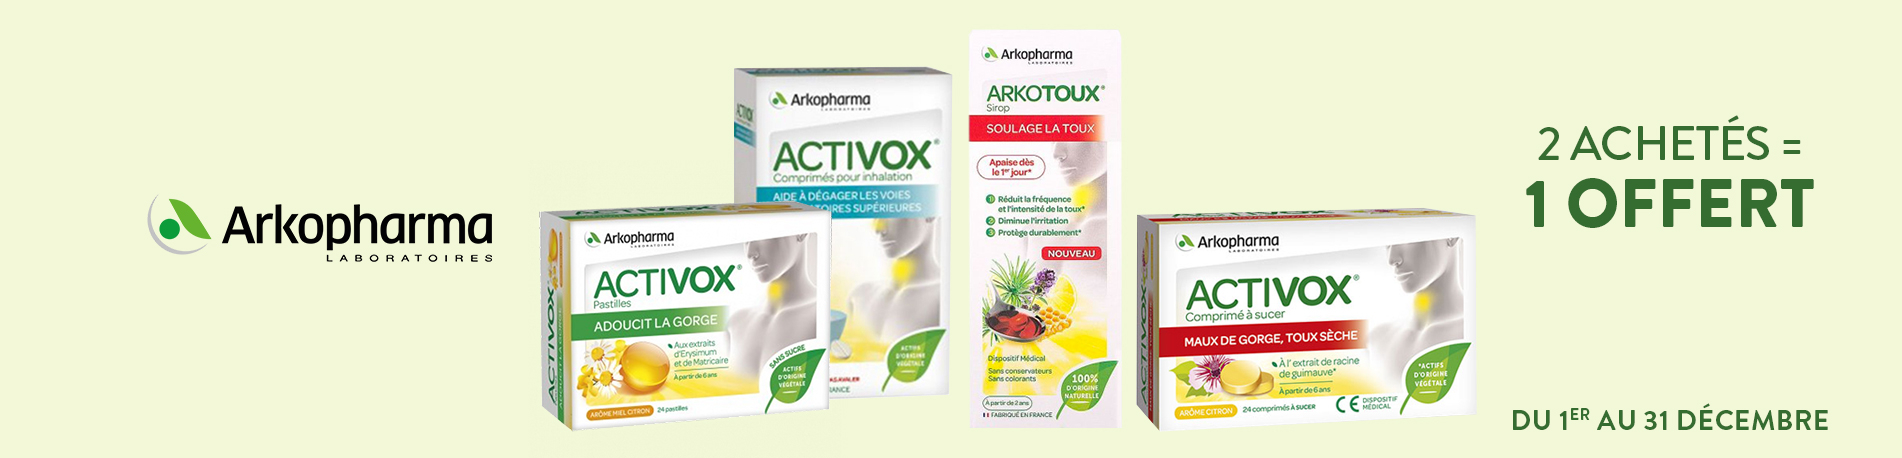 Promotion Arkopharma Arkotoux & Activox